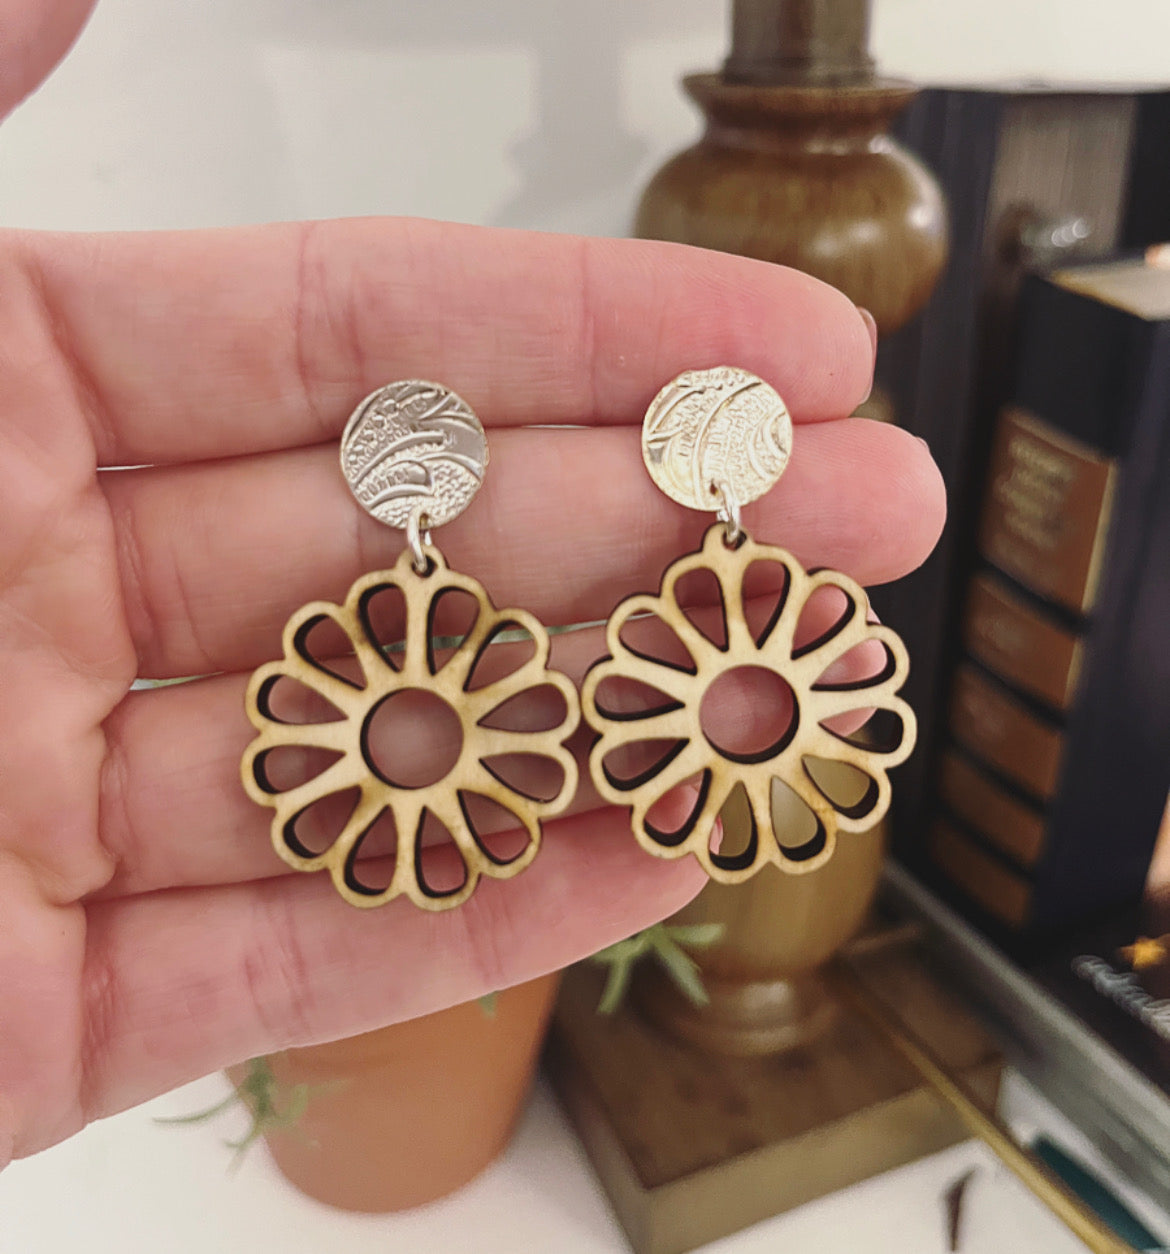 Wooden Sunflower Earrings